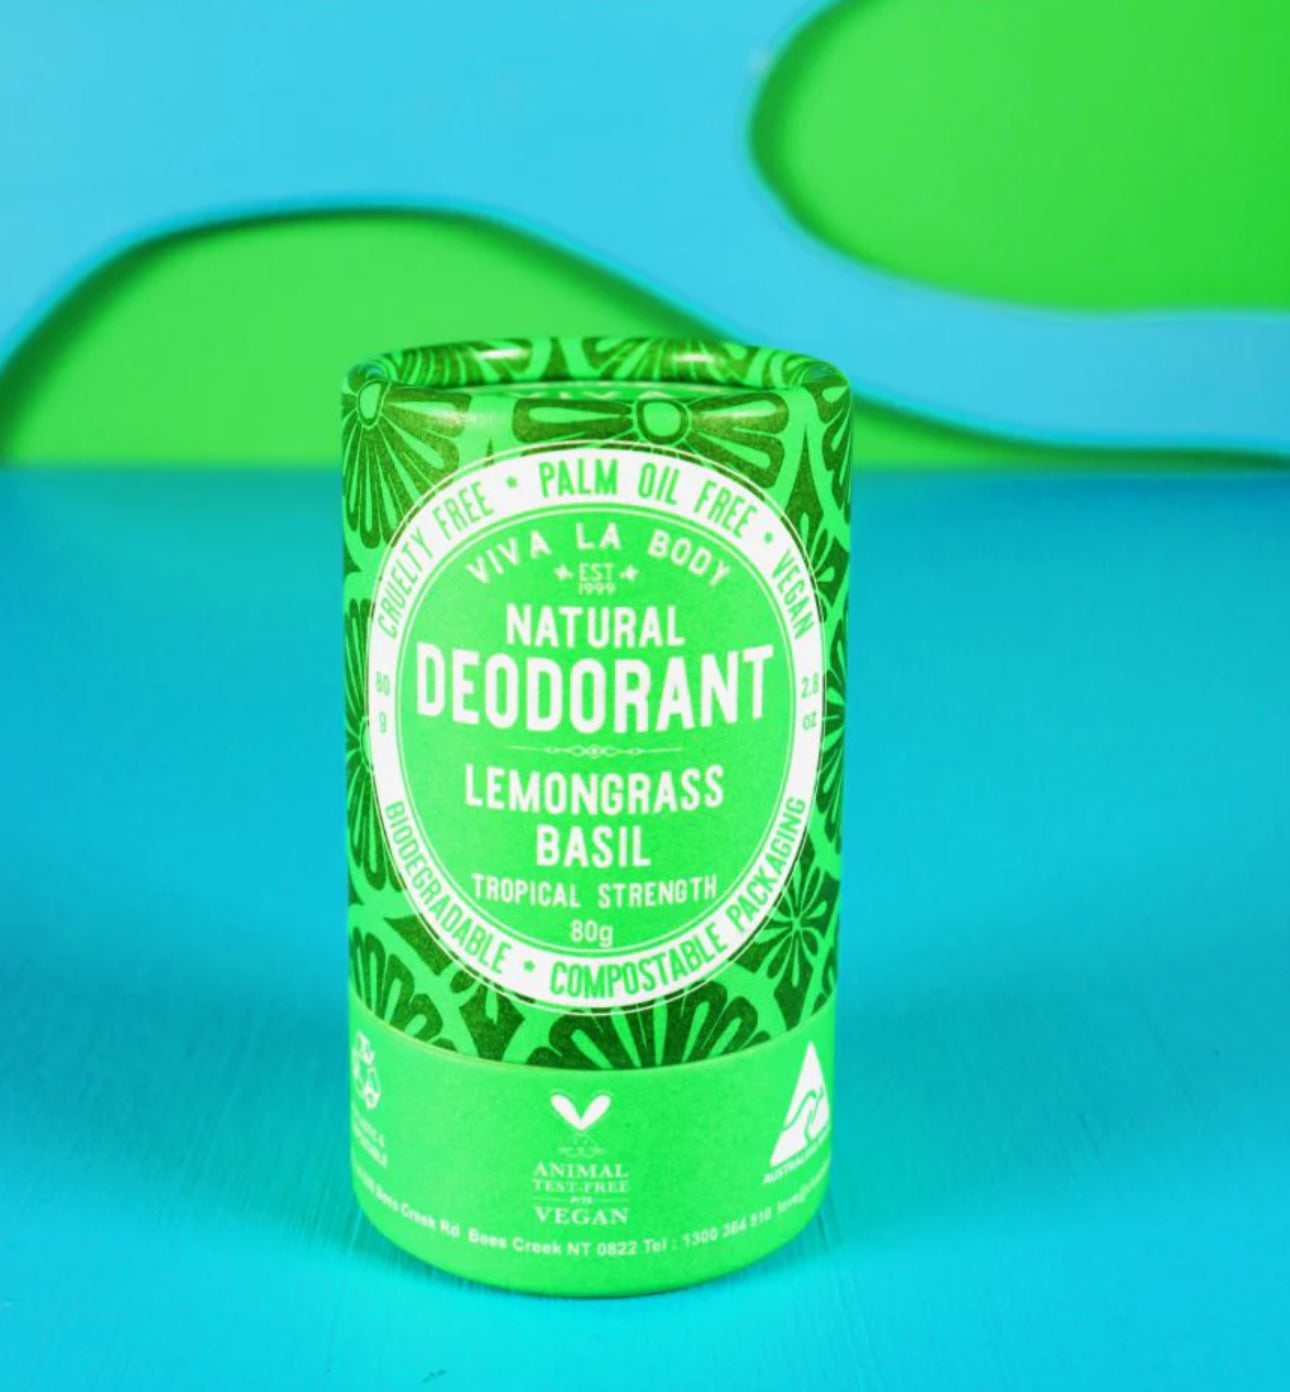 Viva La Body Solid Deodorant stick - Lemongrass Basil